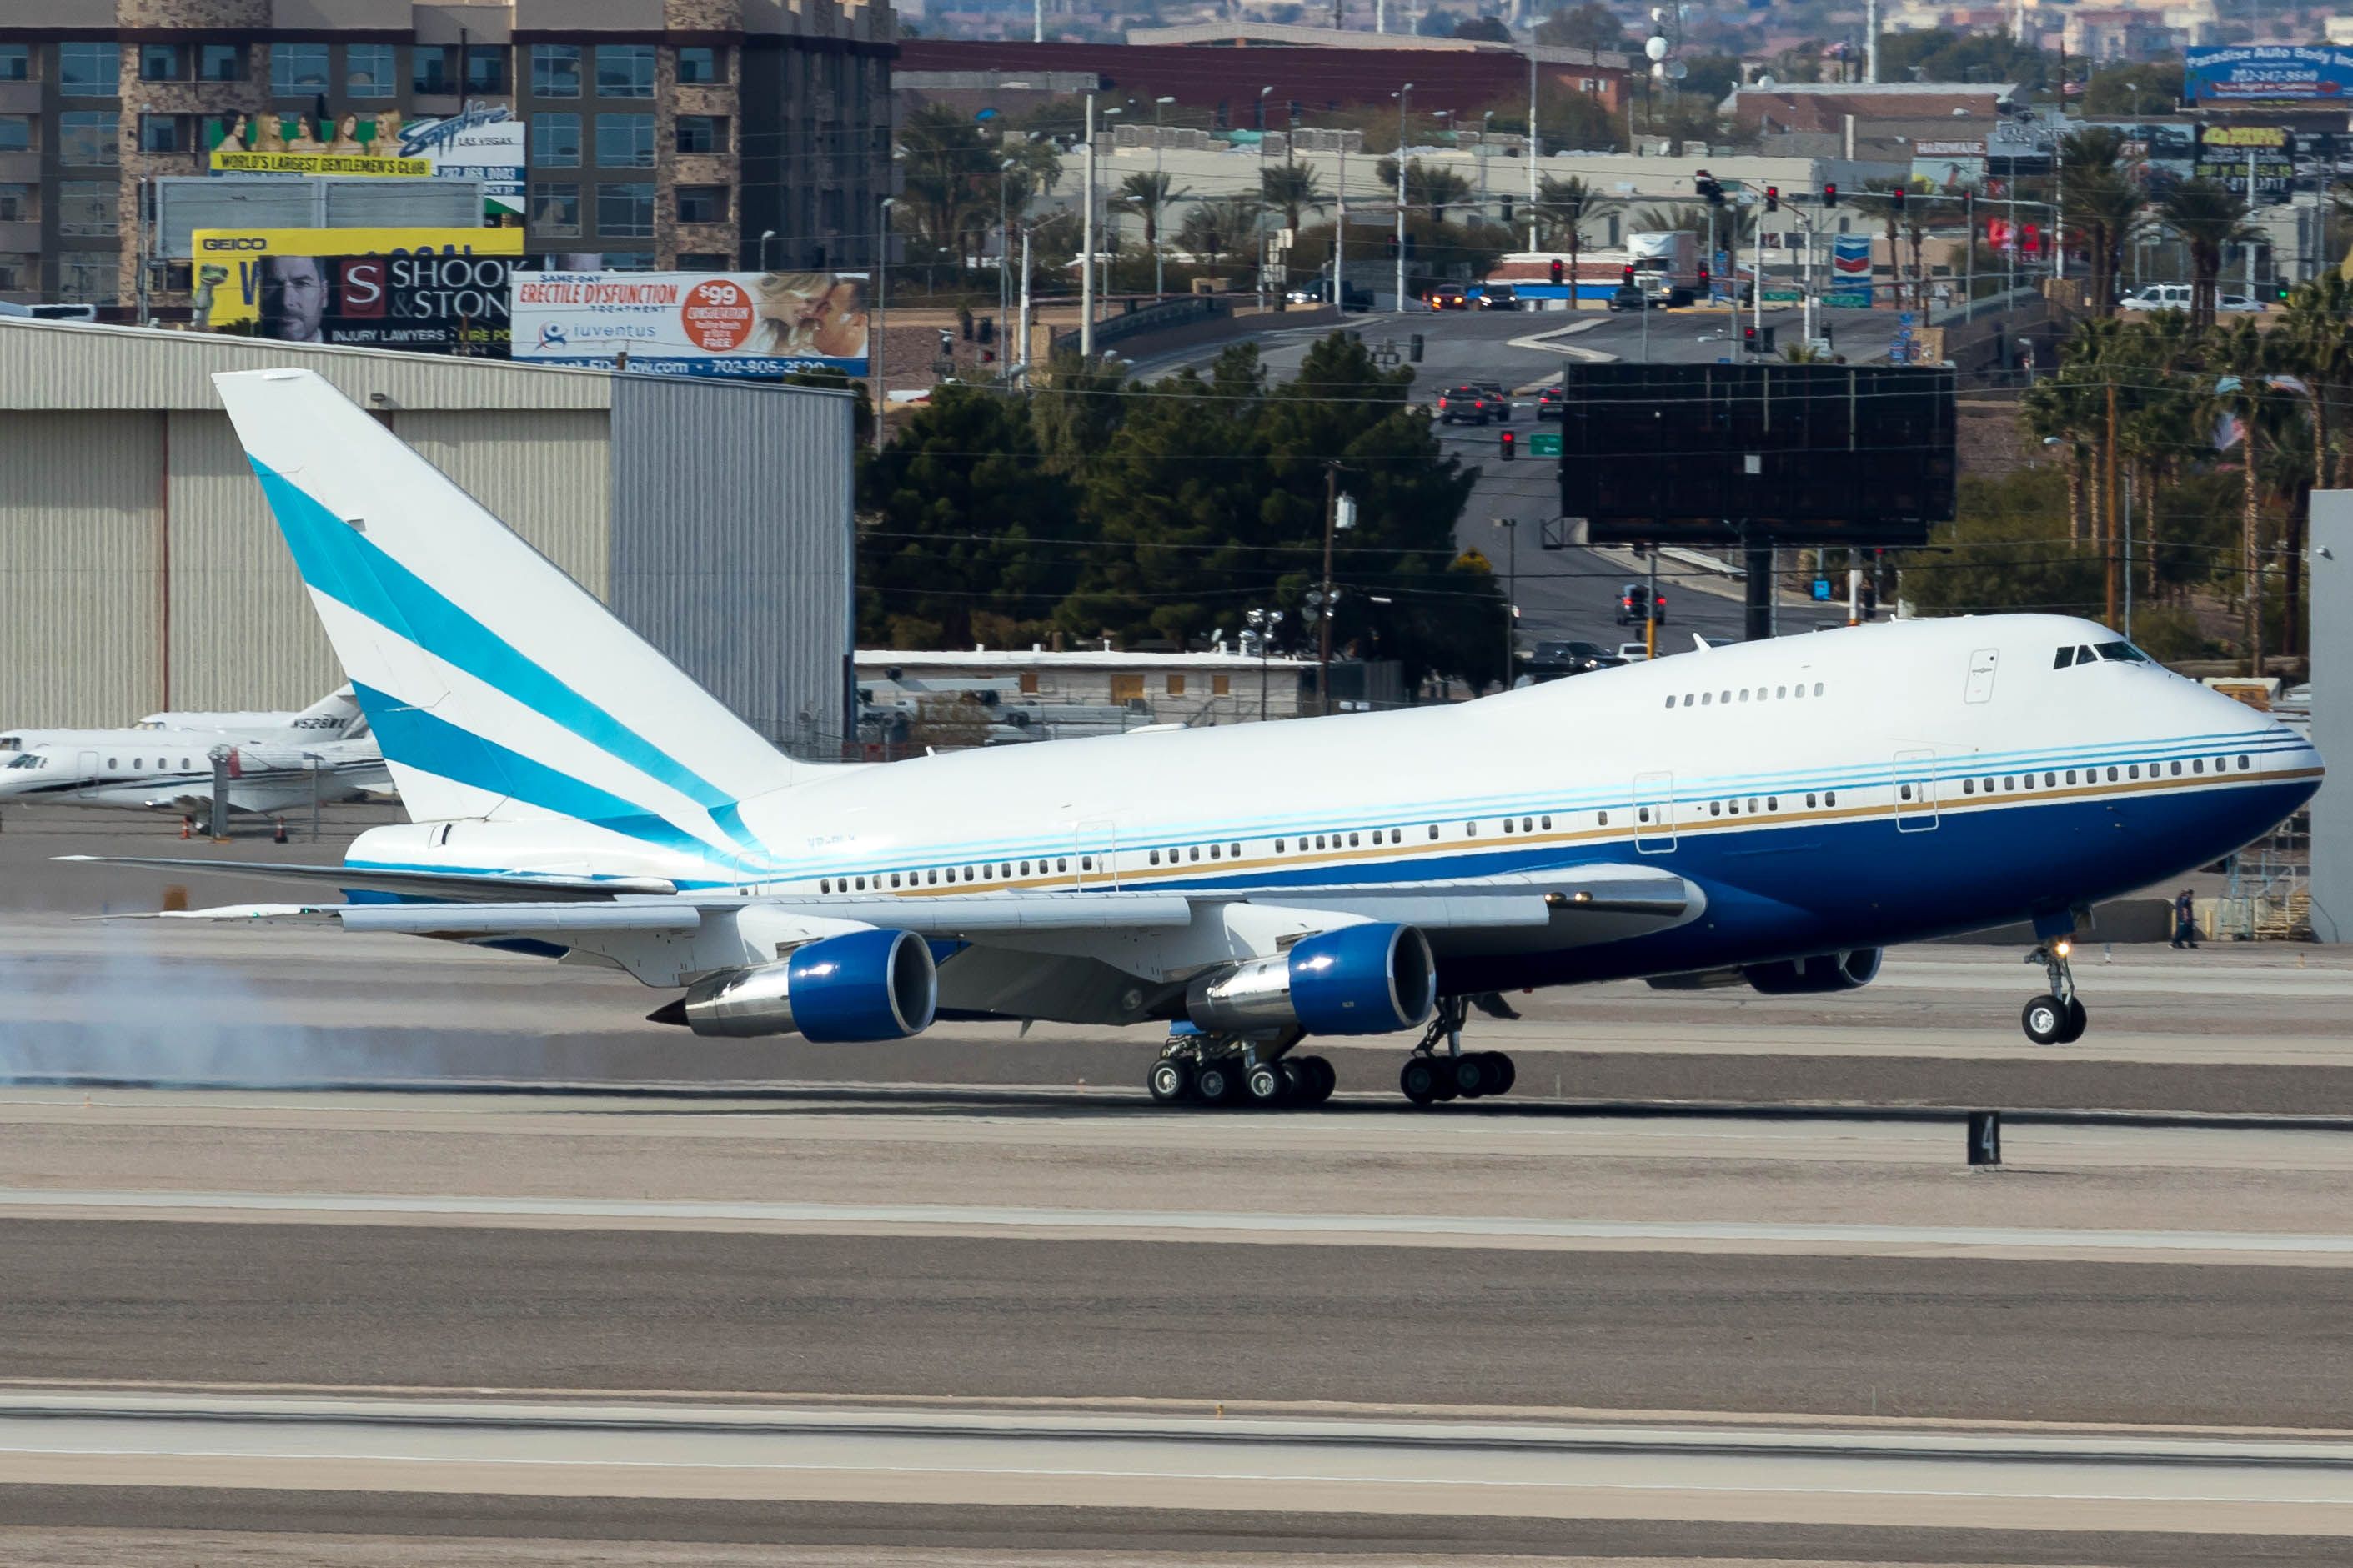 A Sands Boeing 747SP Business jet as it lands.